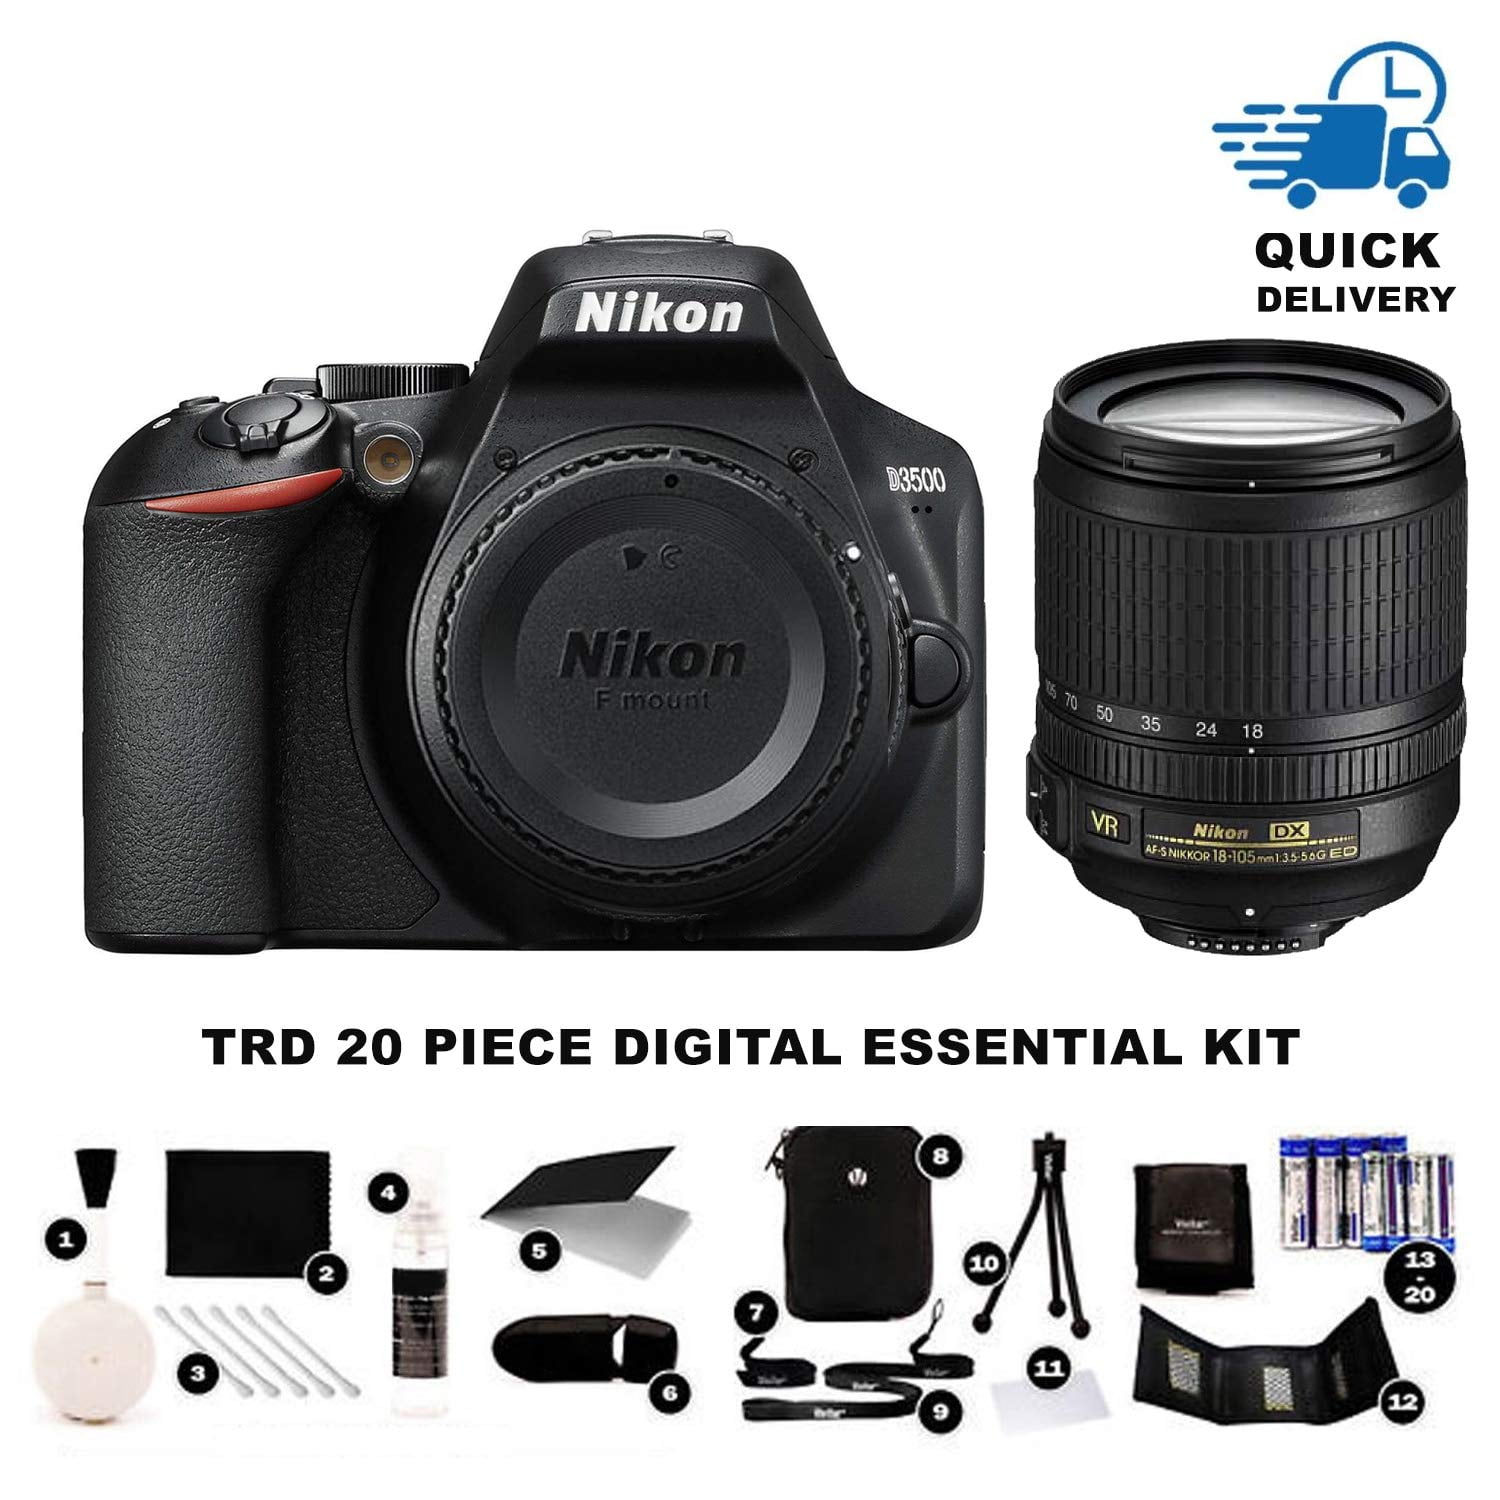 Nikon D3500 DSLR Camera with 18-55mm and 70-300mm Lenses - Black for sale  online